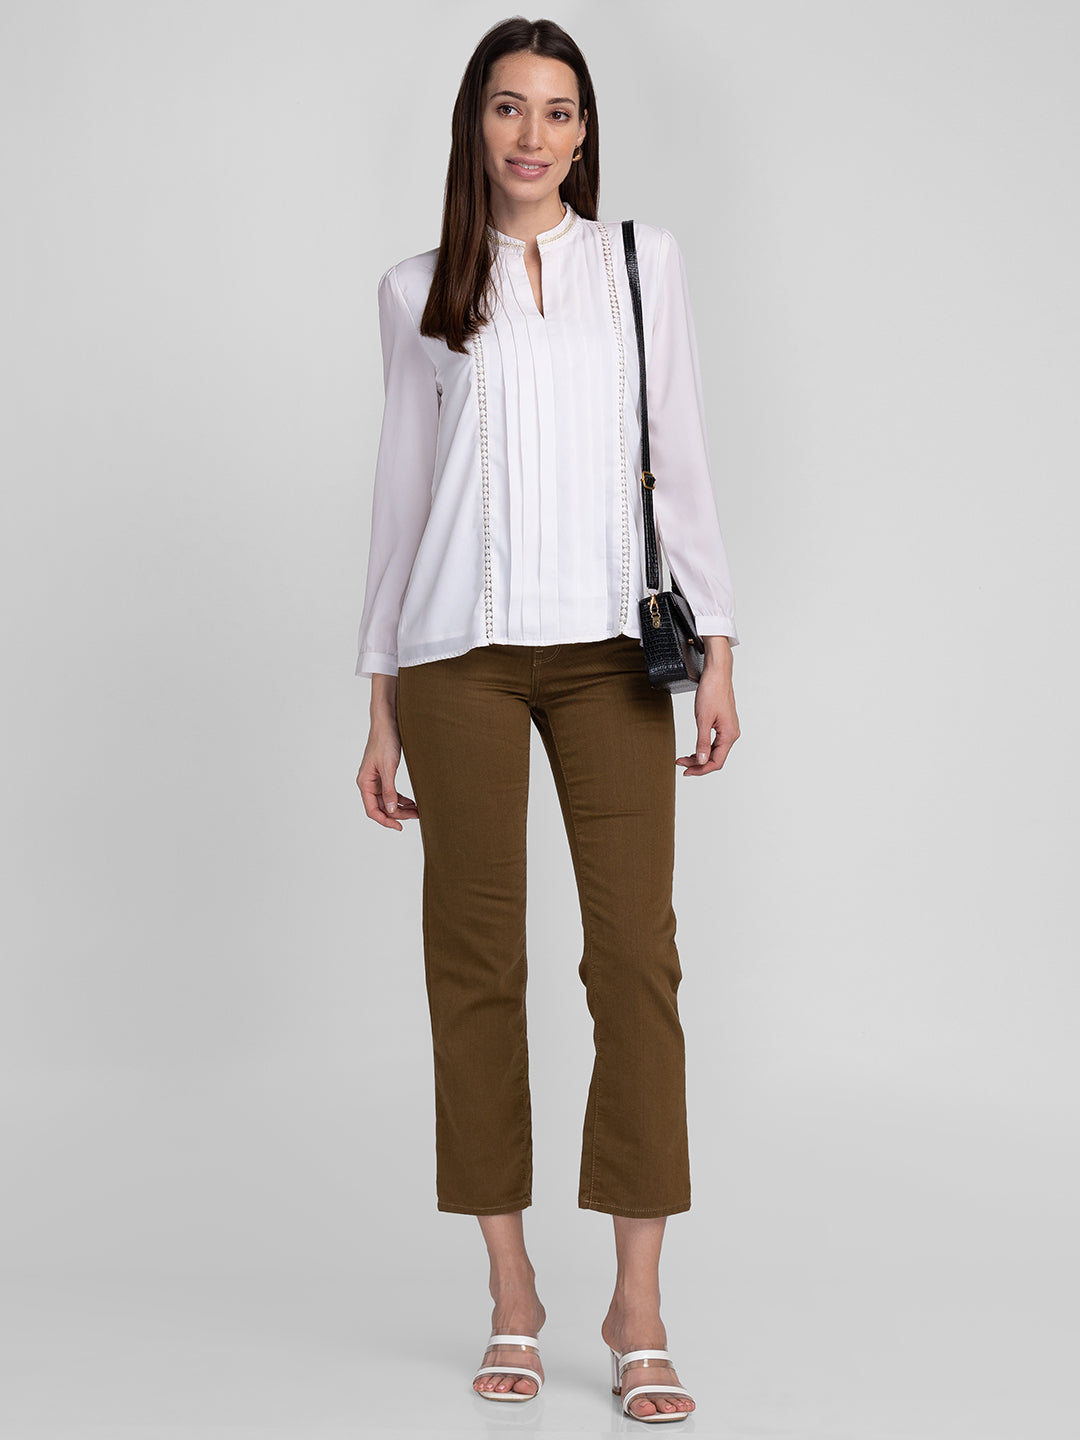 Spykar Women Dark Khaki Cotton Slim Straigth Fit Ankle Length Jeans (Emma)